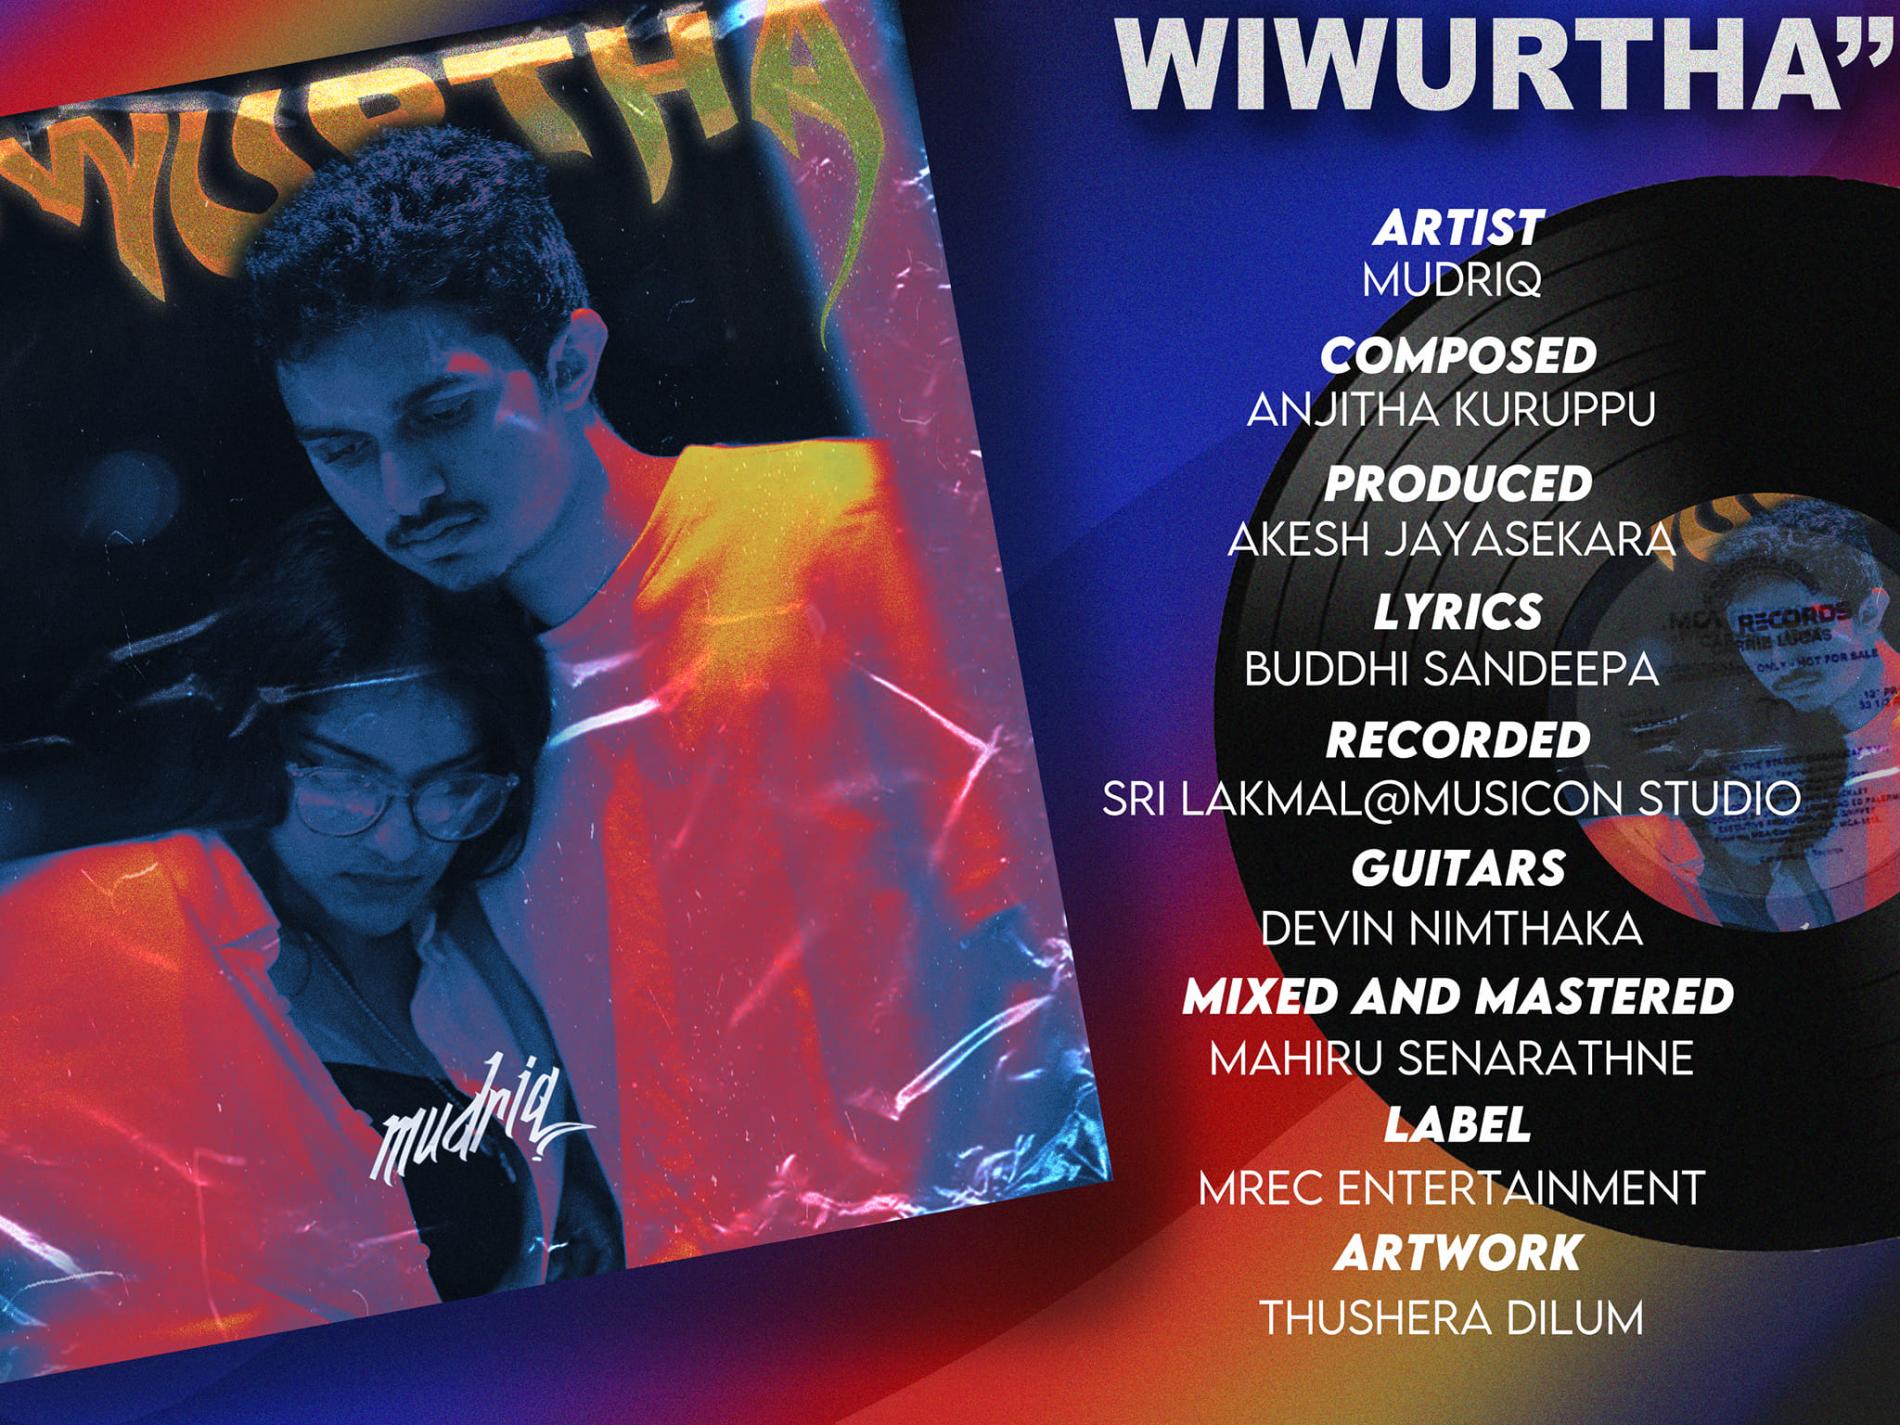 New Music : Mudriq – Wiwurtha (Official Video)